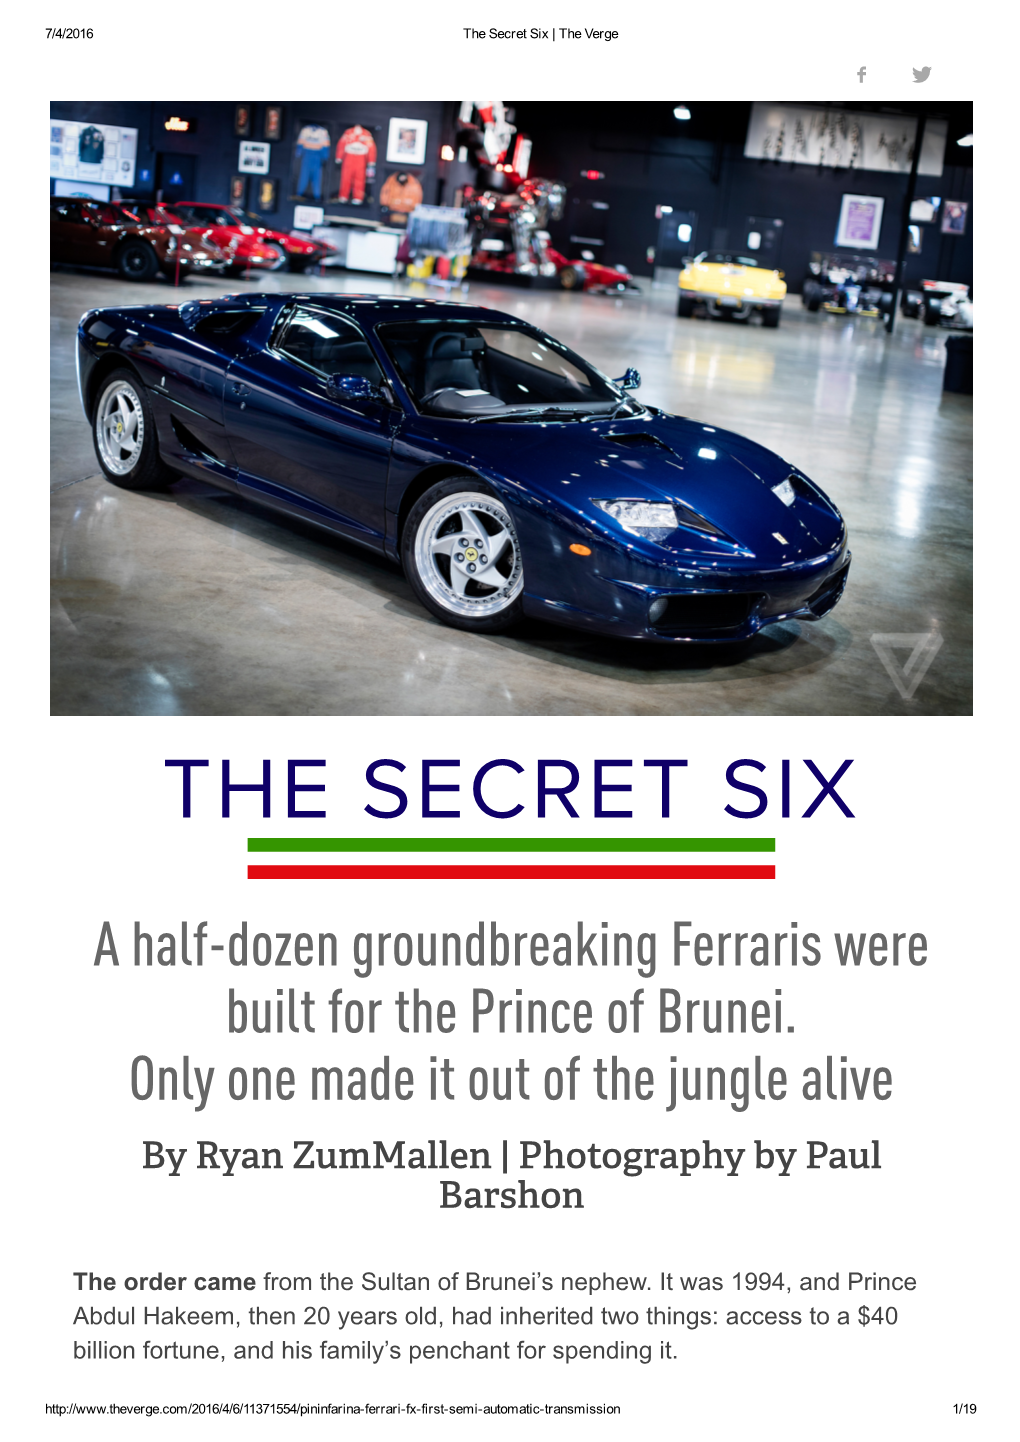 A Half-Dozen Groundbreaking Ferraris Were Built for the Prince of Brunei